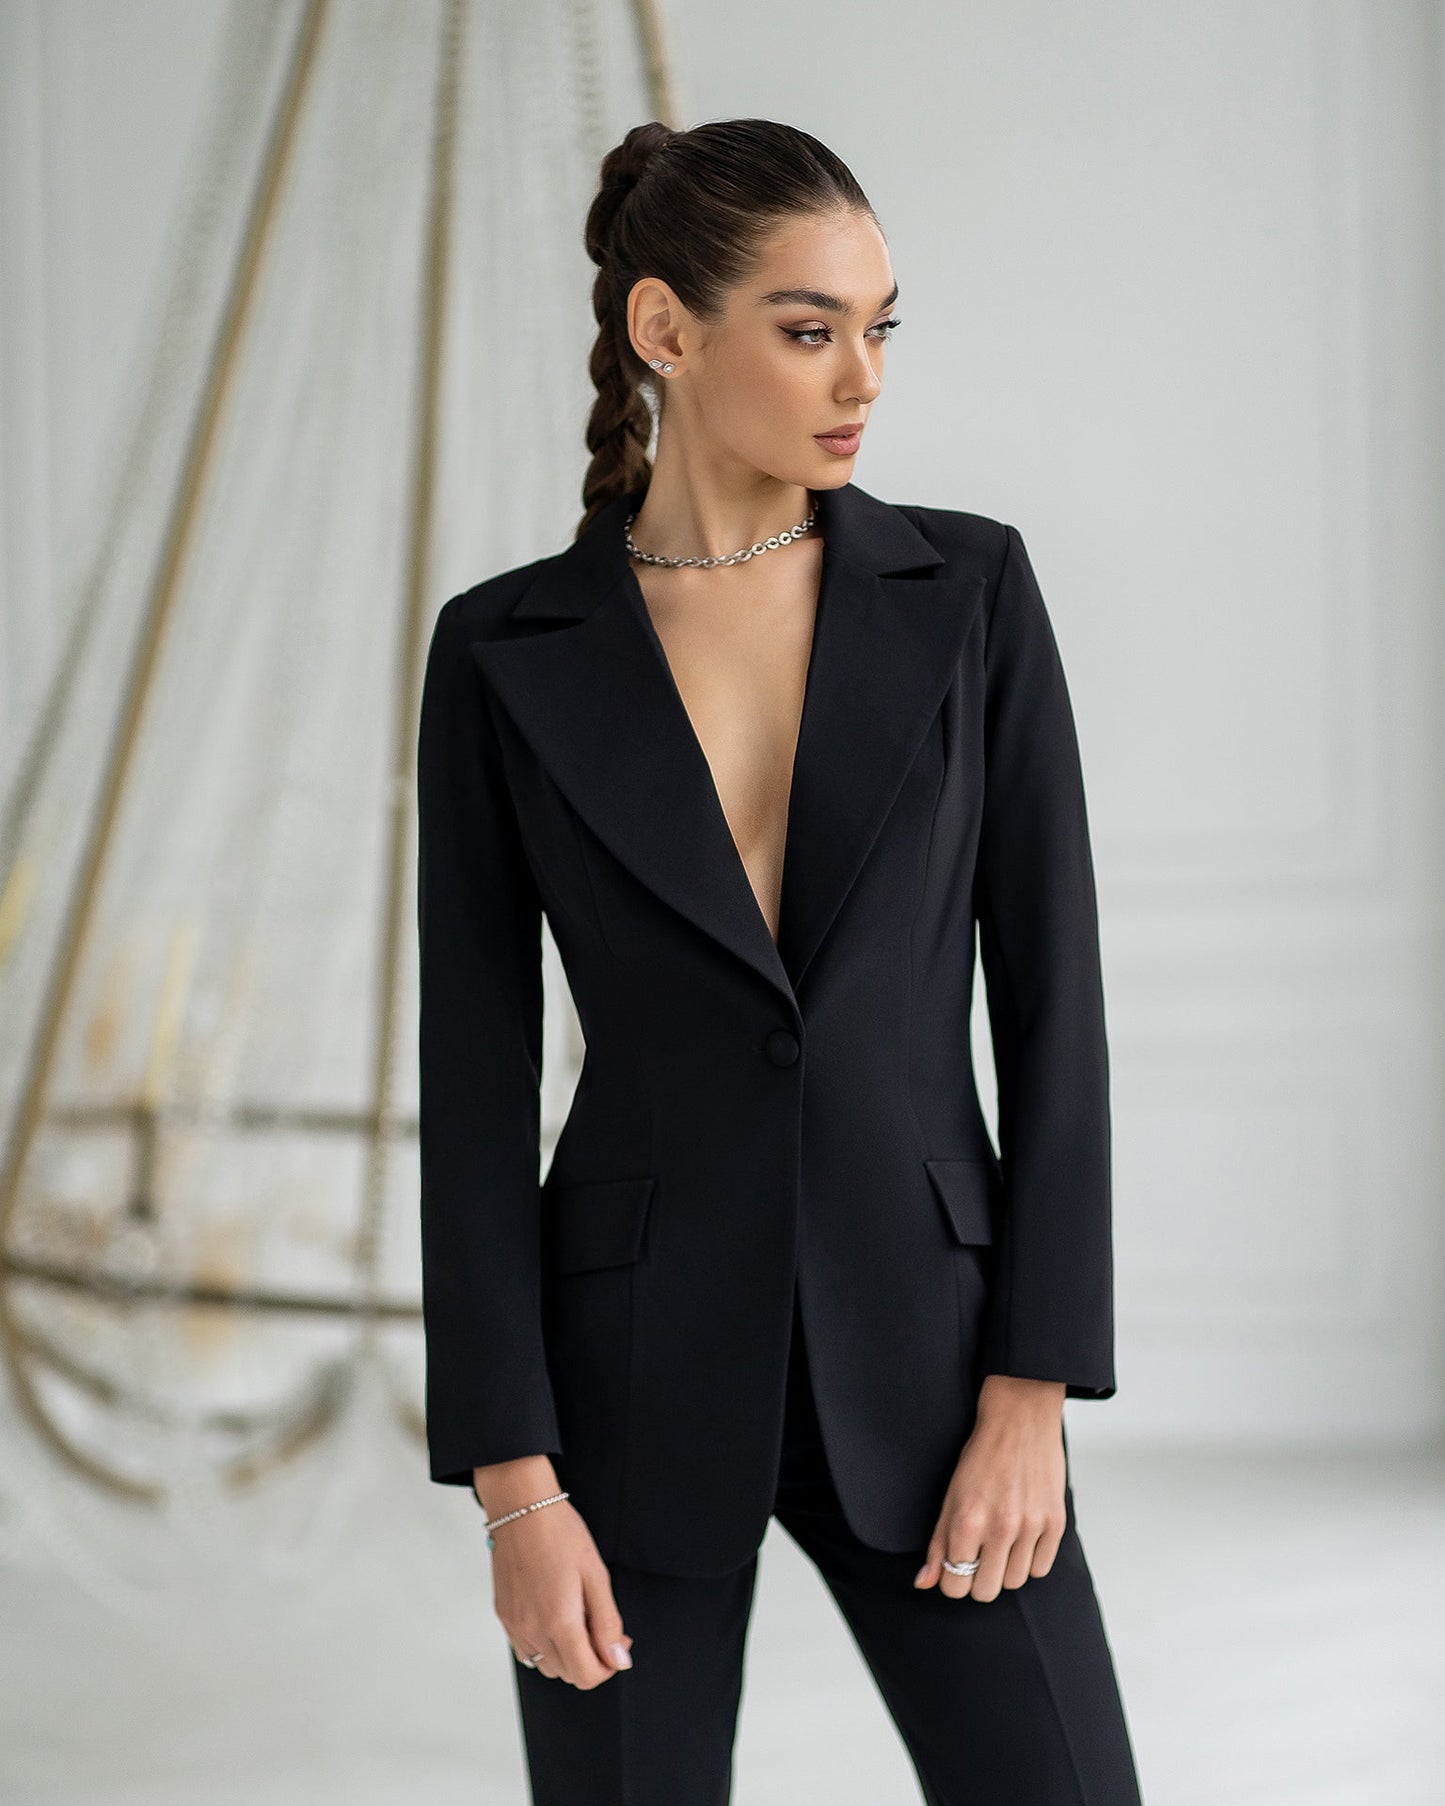 trinarosh Black Single-Breasted Suit 2-Piece